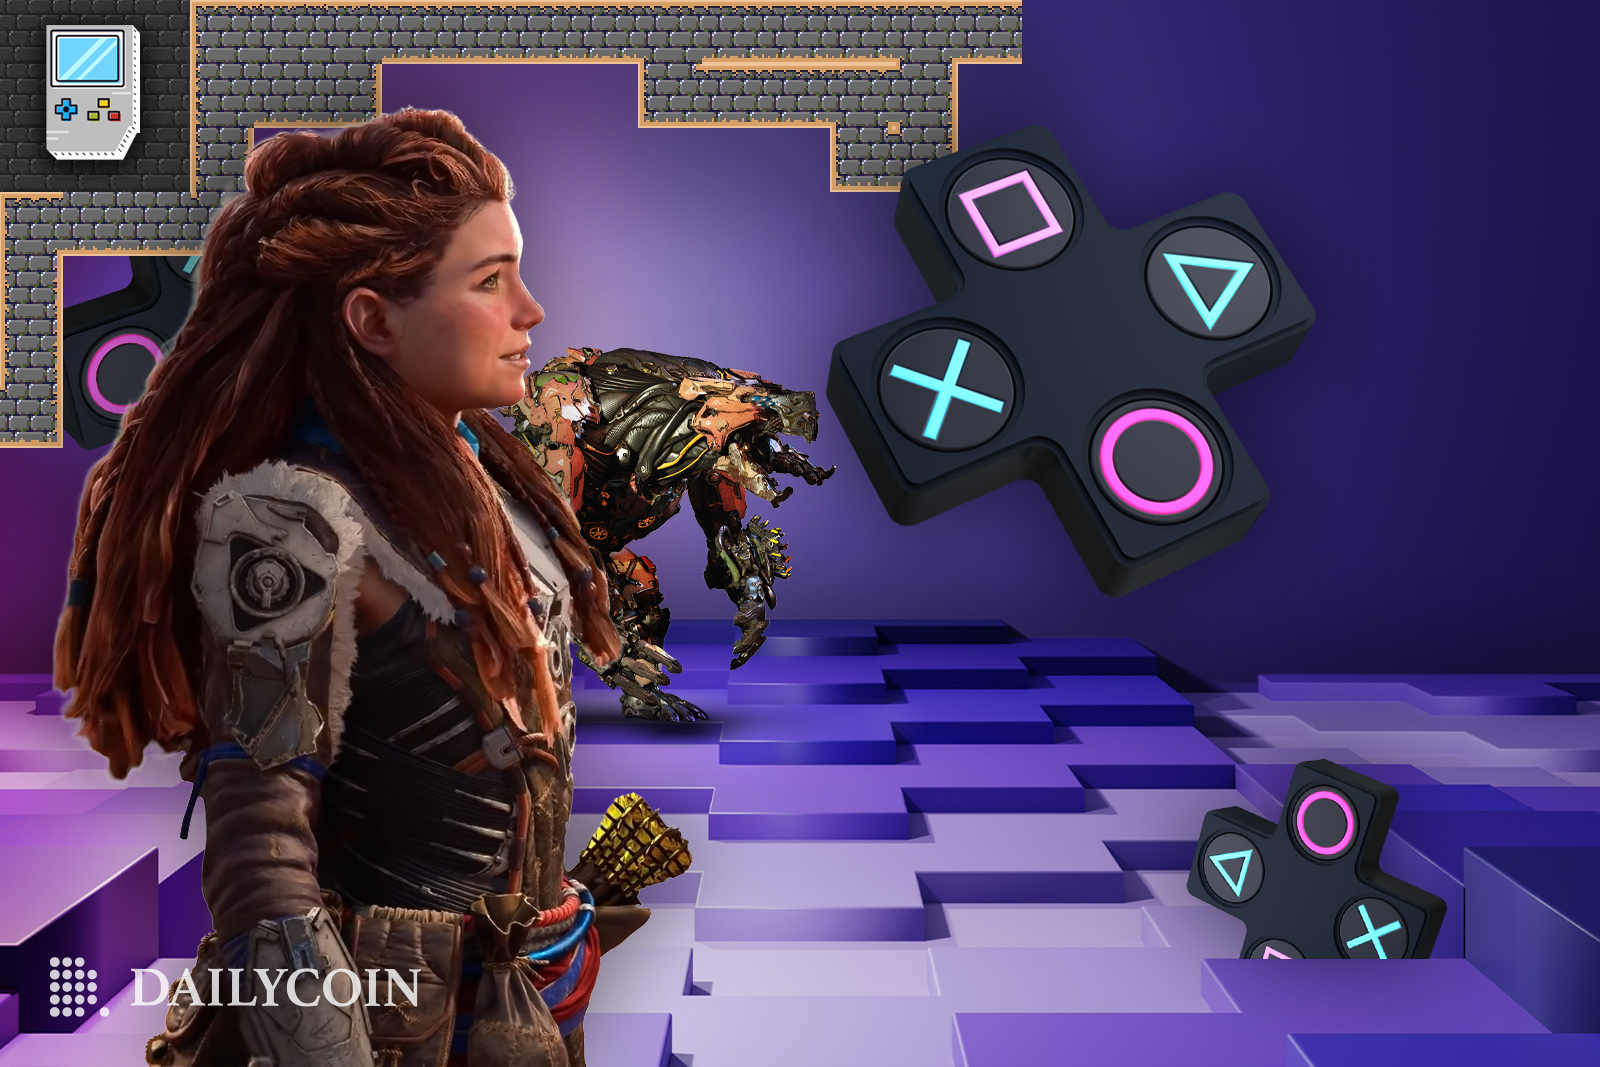 Video game Horizon character on game platform looking at controller keys